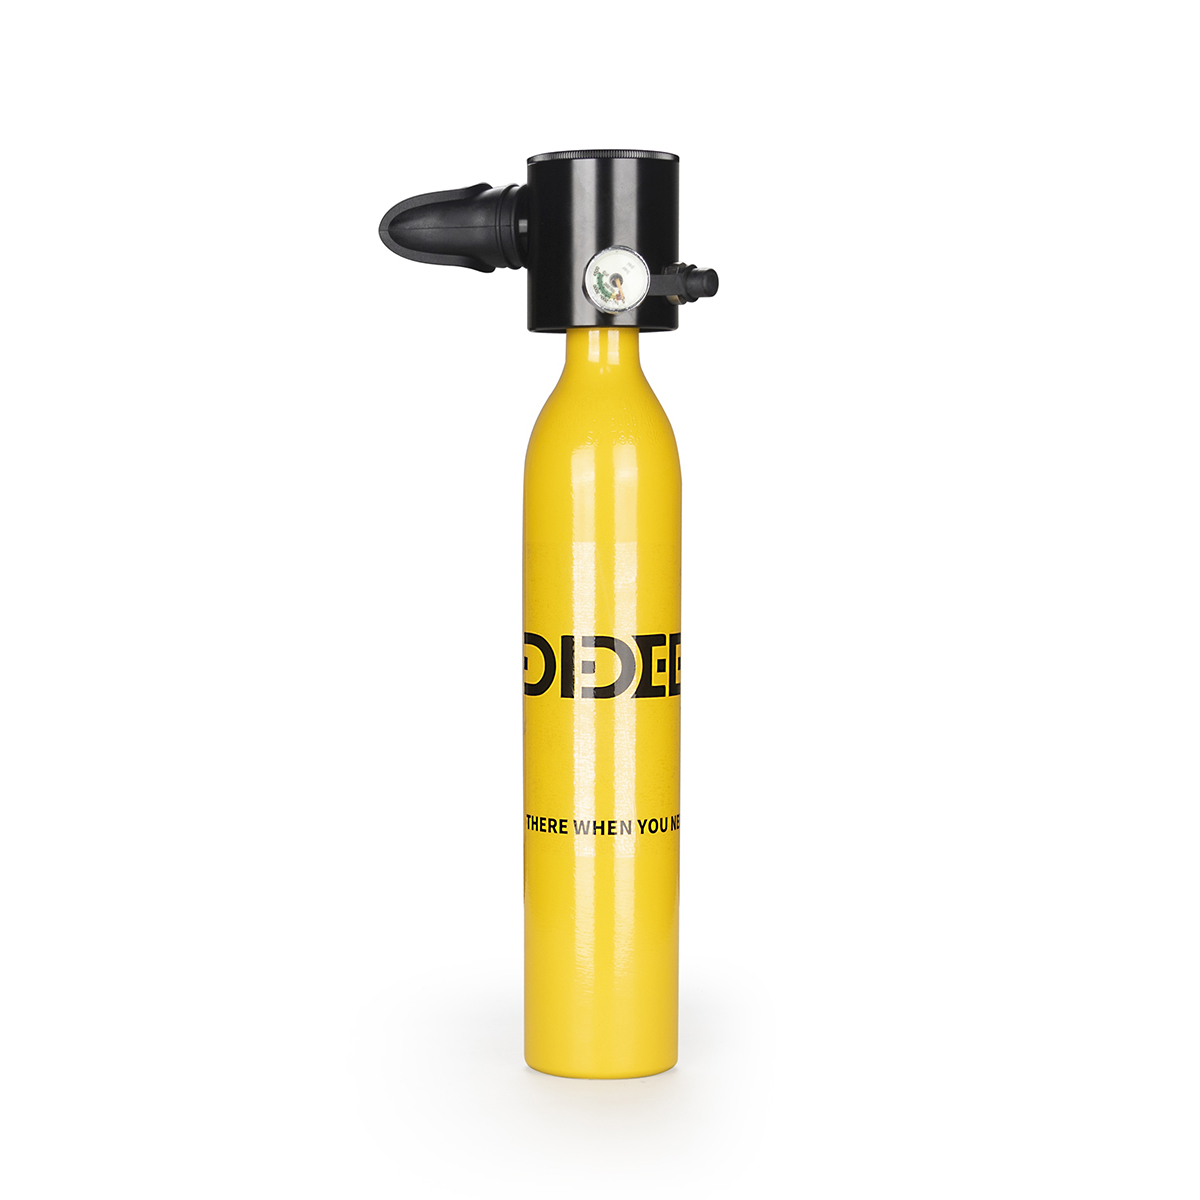 DIDEEP-Oxygen-Cylinder-Mini-Scuba-Diving-Equipment-Air-Tank-Oxygen-Tank-Set-Kit-1588096